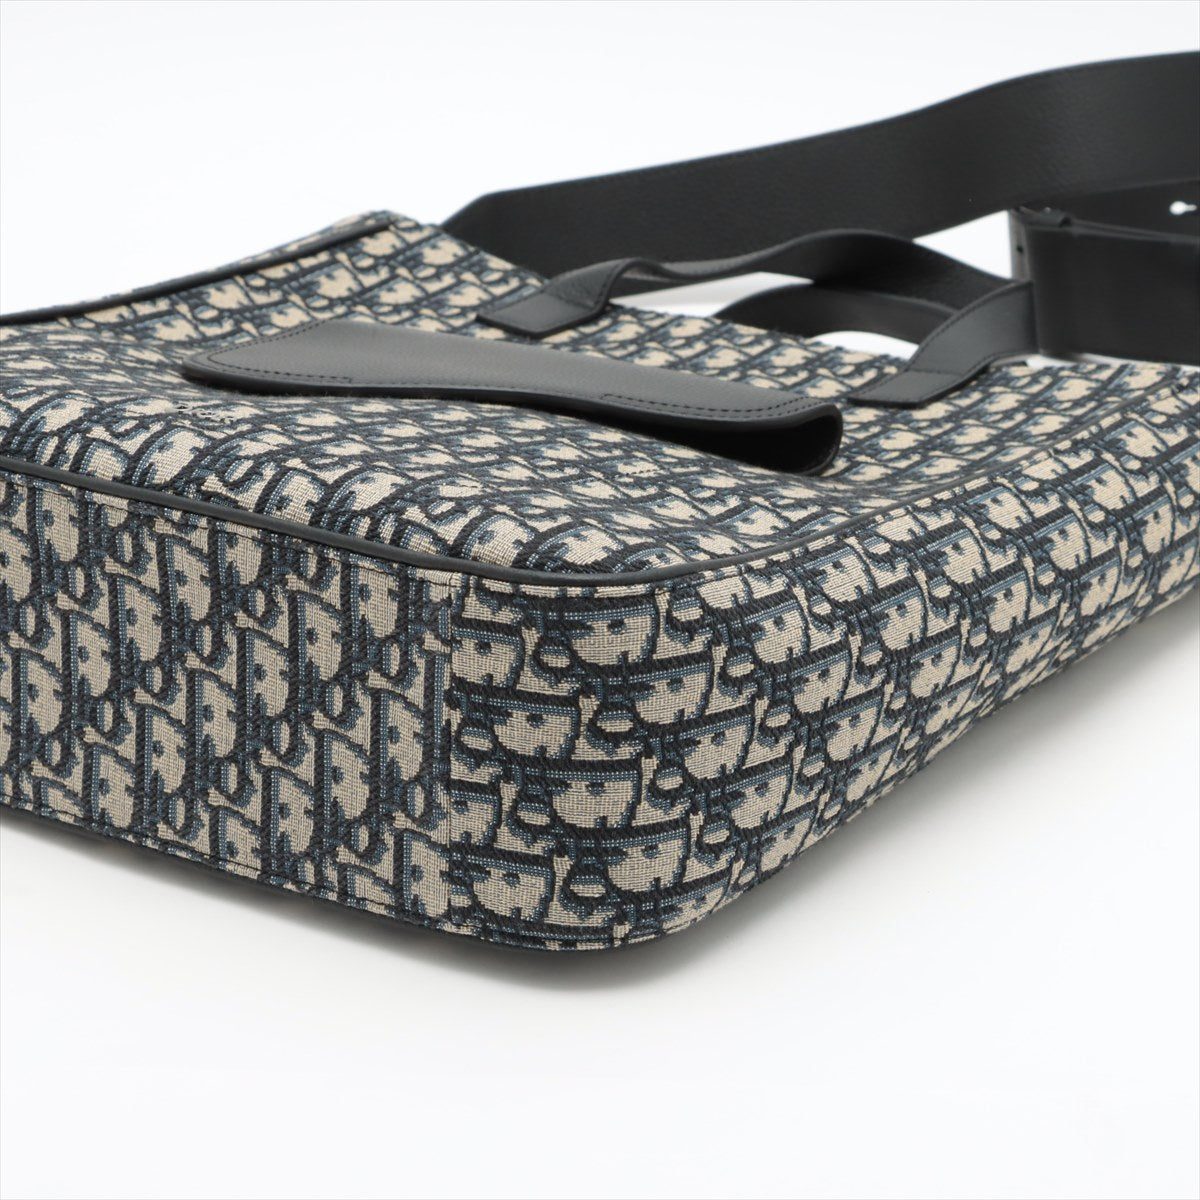 Christian Dior Oblique Saddle Canvas & leather 2way handbag Black x Navy